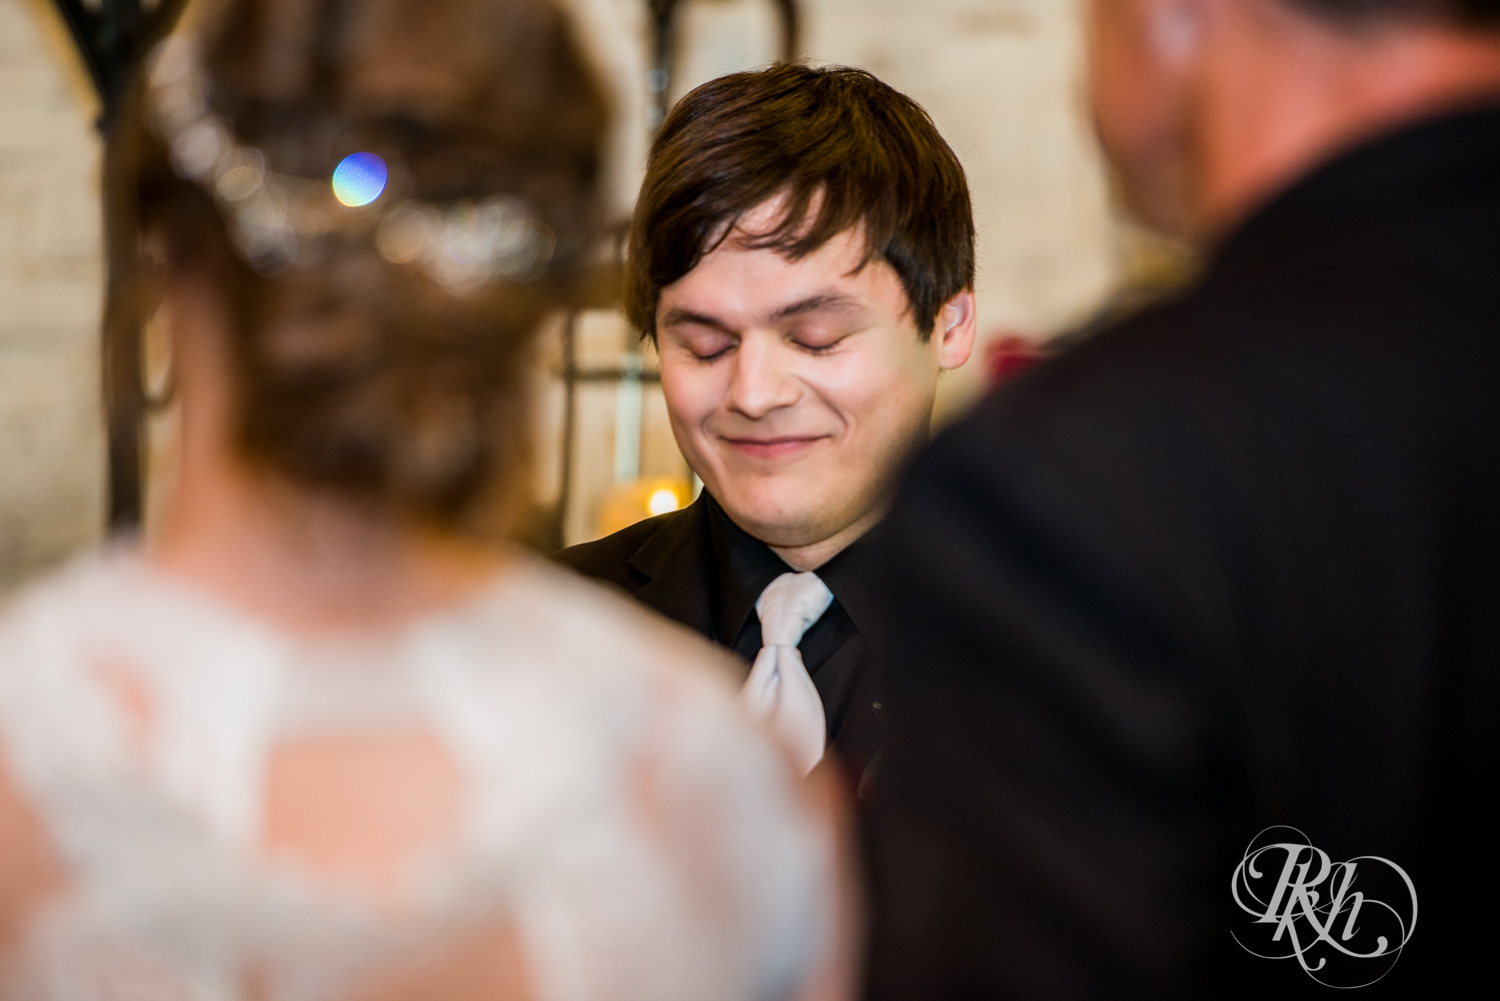 Groom gets emotional seeing bride walk down the aisle at Kellerman's Event Center in White Bear Lake, Minnesota.